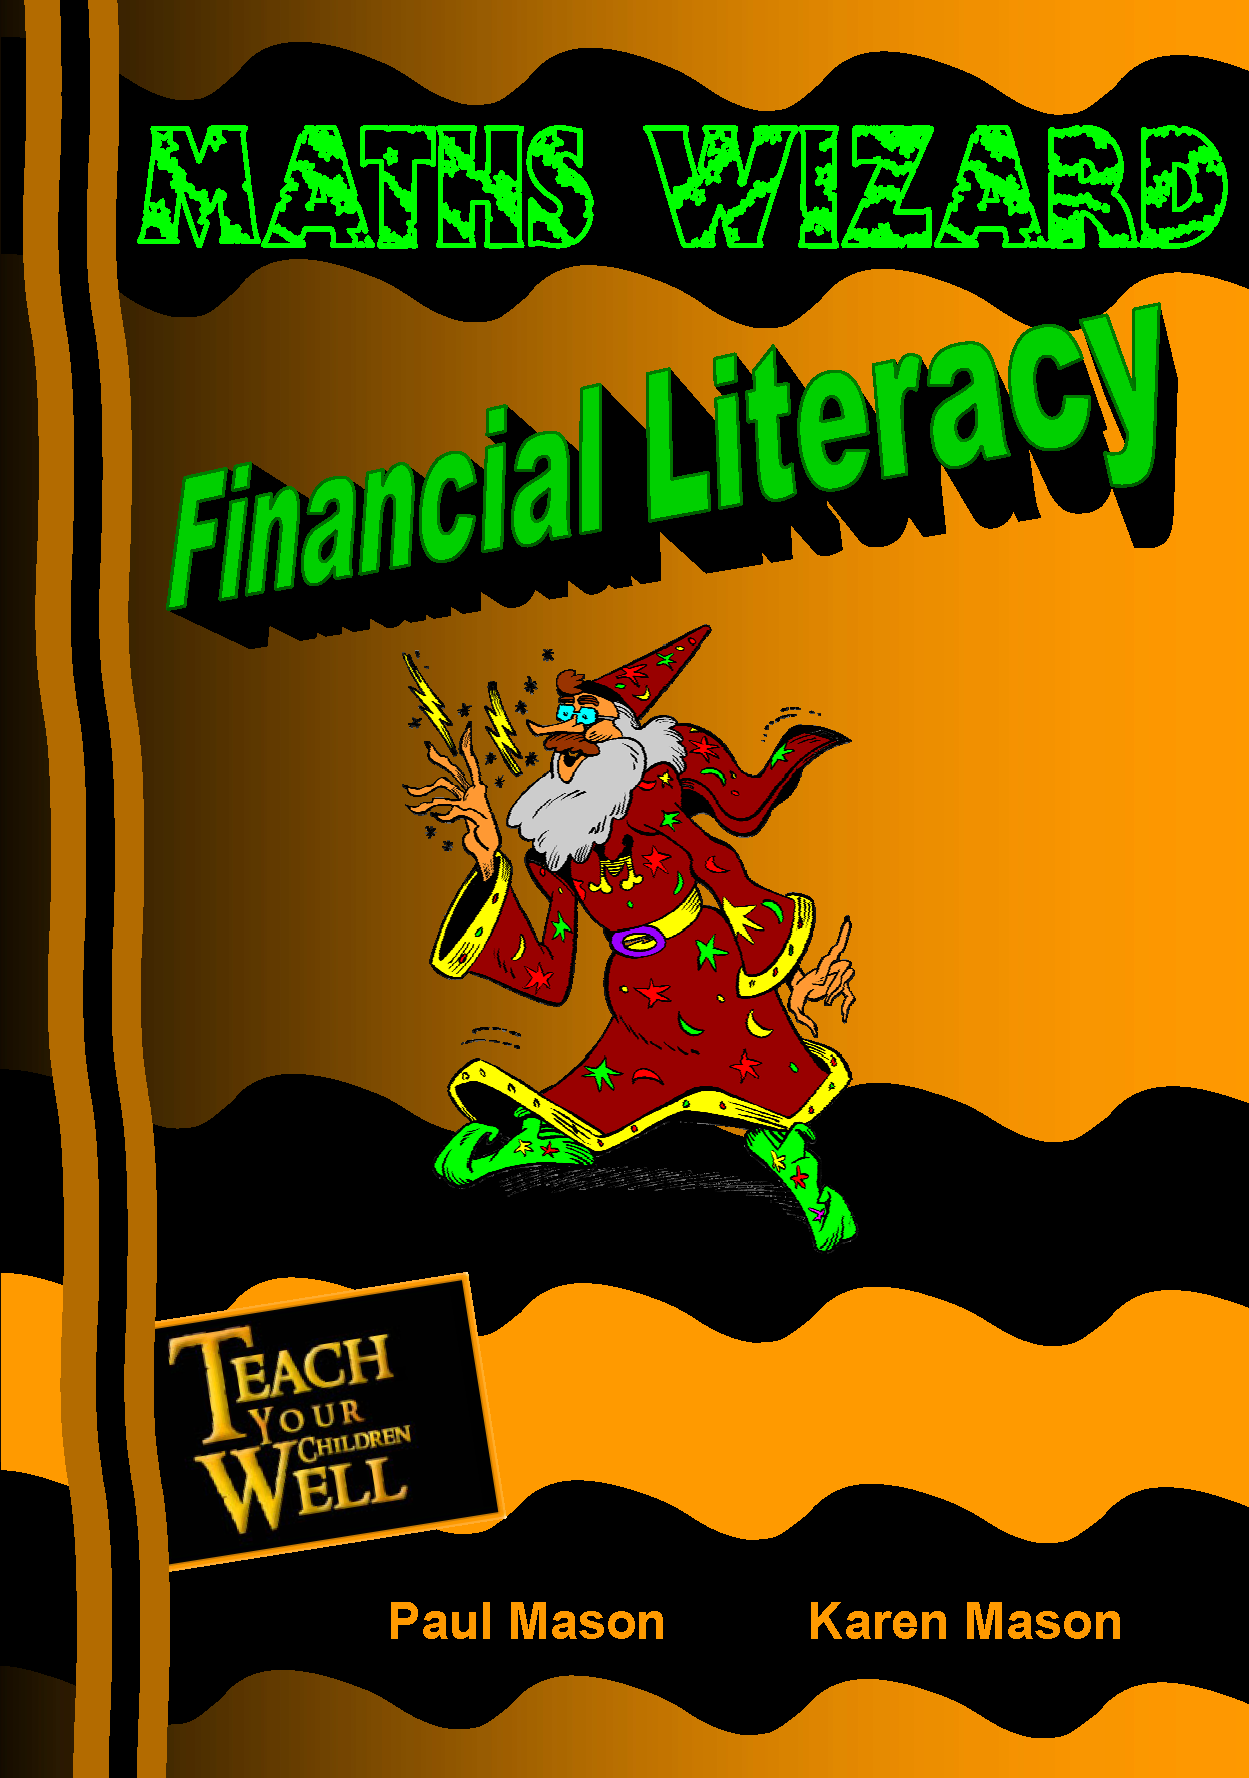 Financial Literacy (Money)